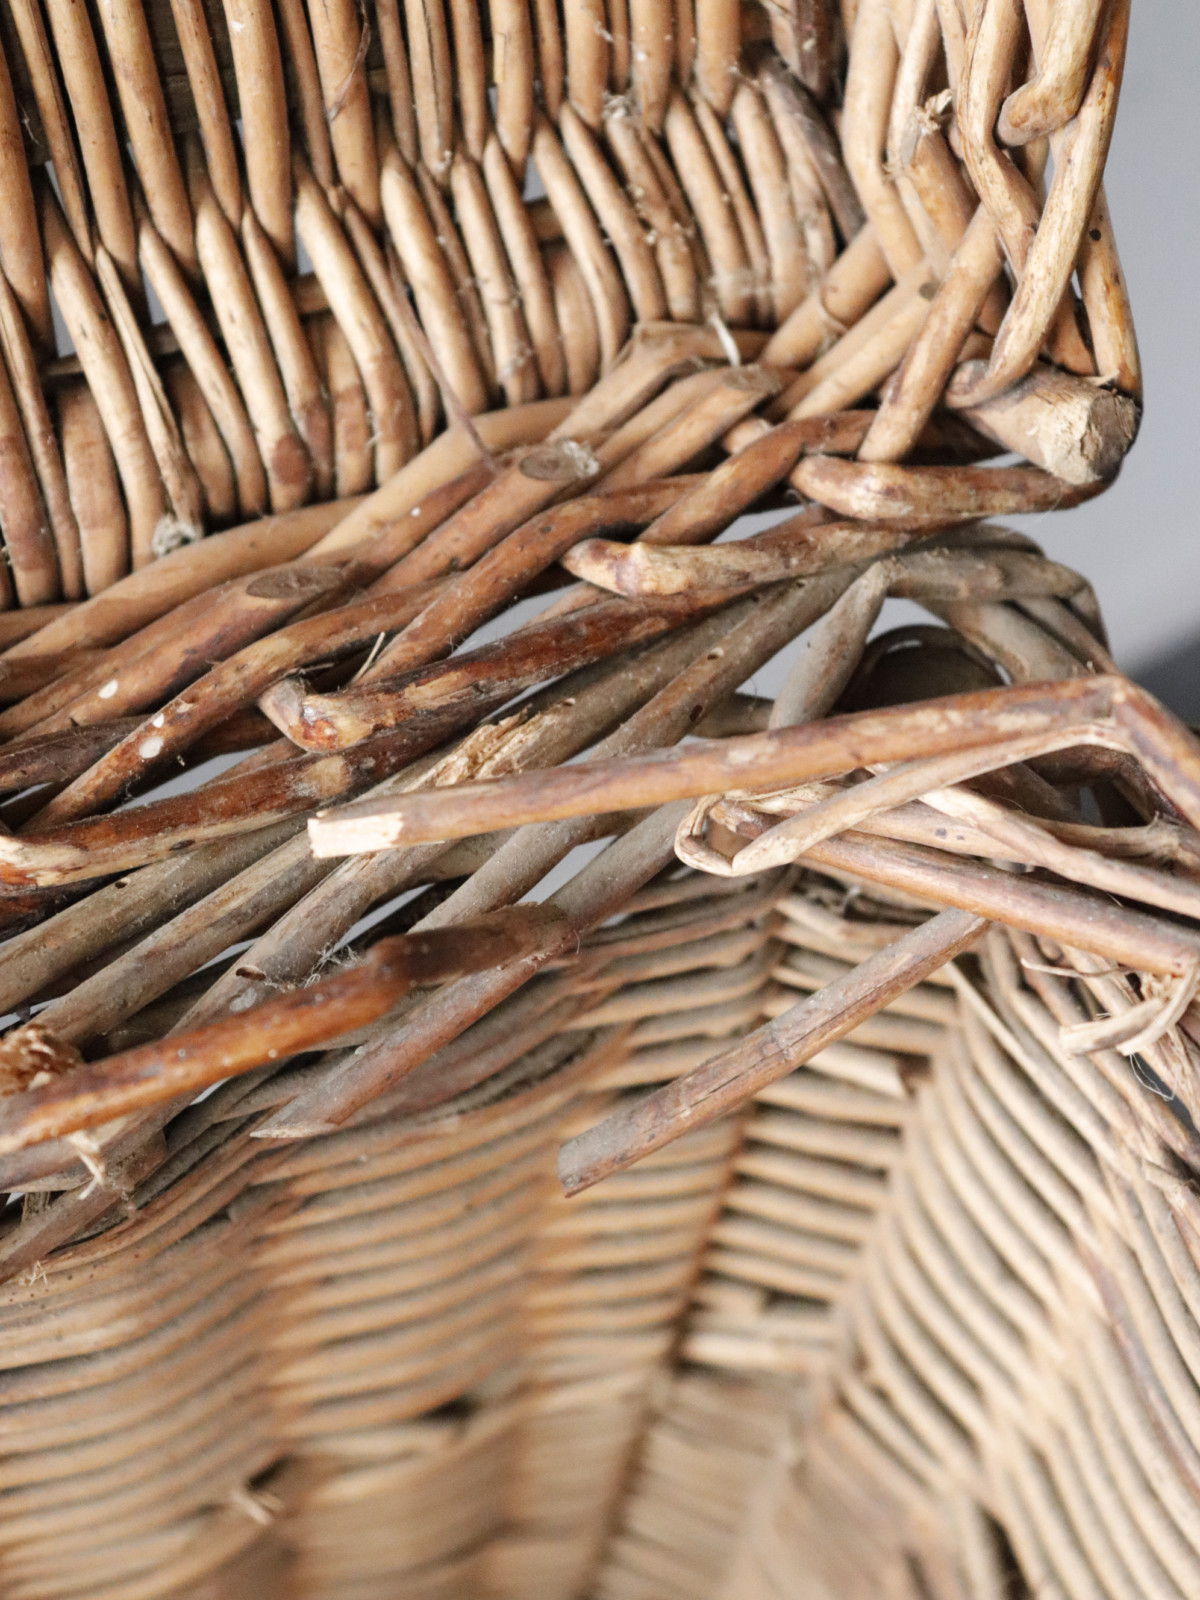 wicker basket, trunk, France, vintage